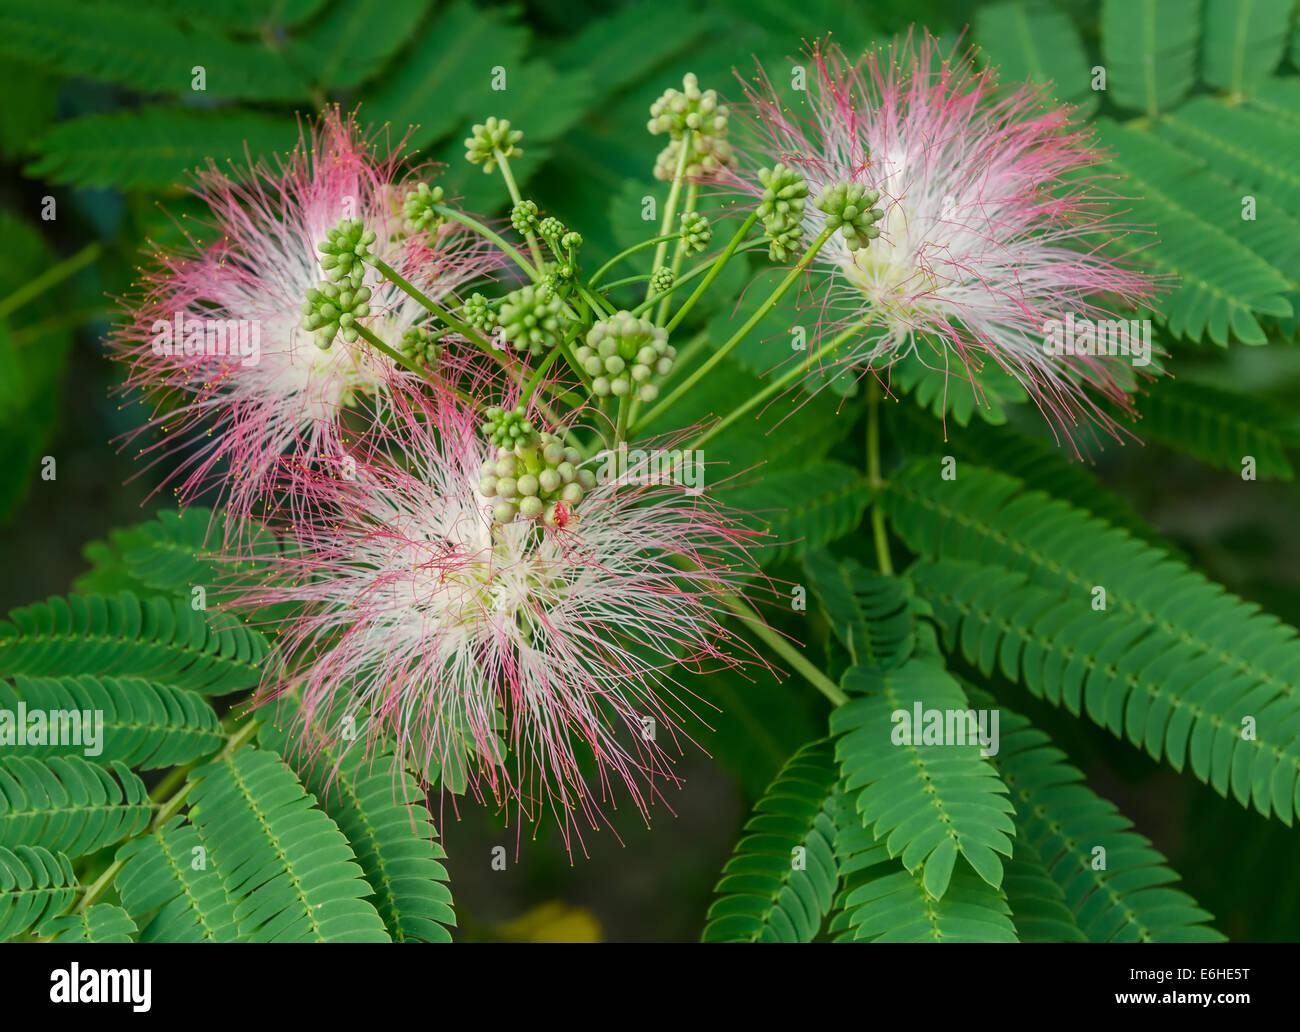 Closeup of Persian Silk Tree (Albizia julibrissin) or Pink Siris Flowers Foliage and Immature Fruits, Horizontal Day shot Stock Photo